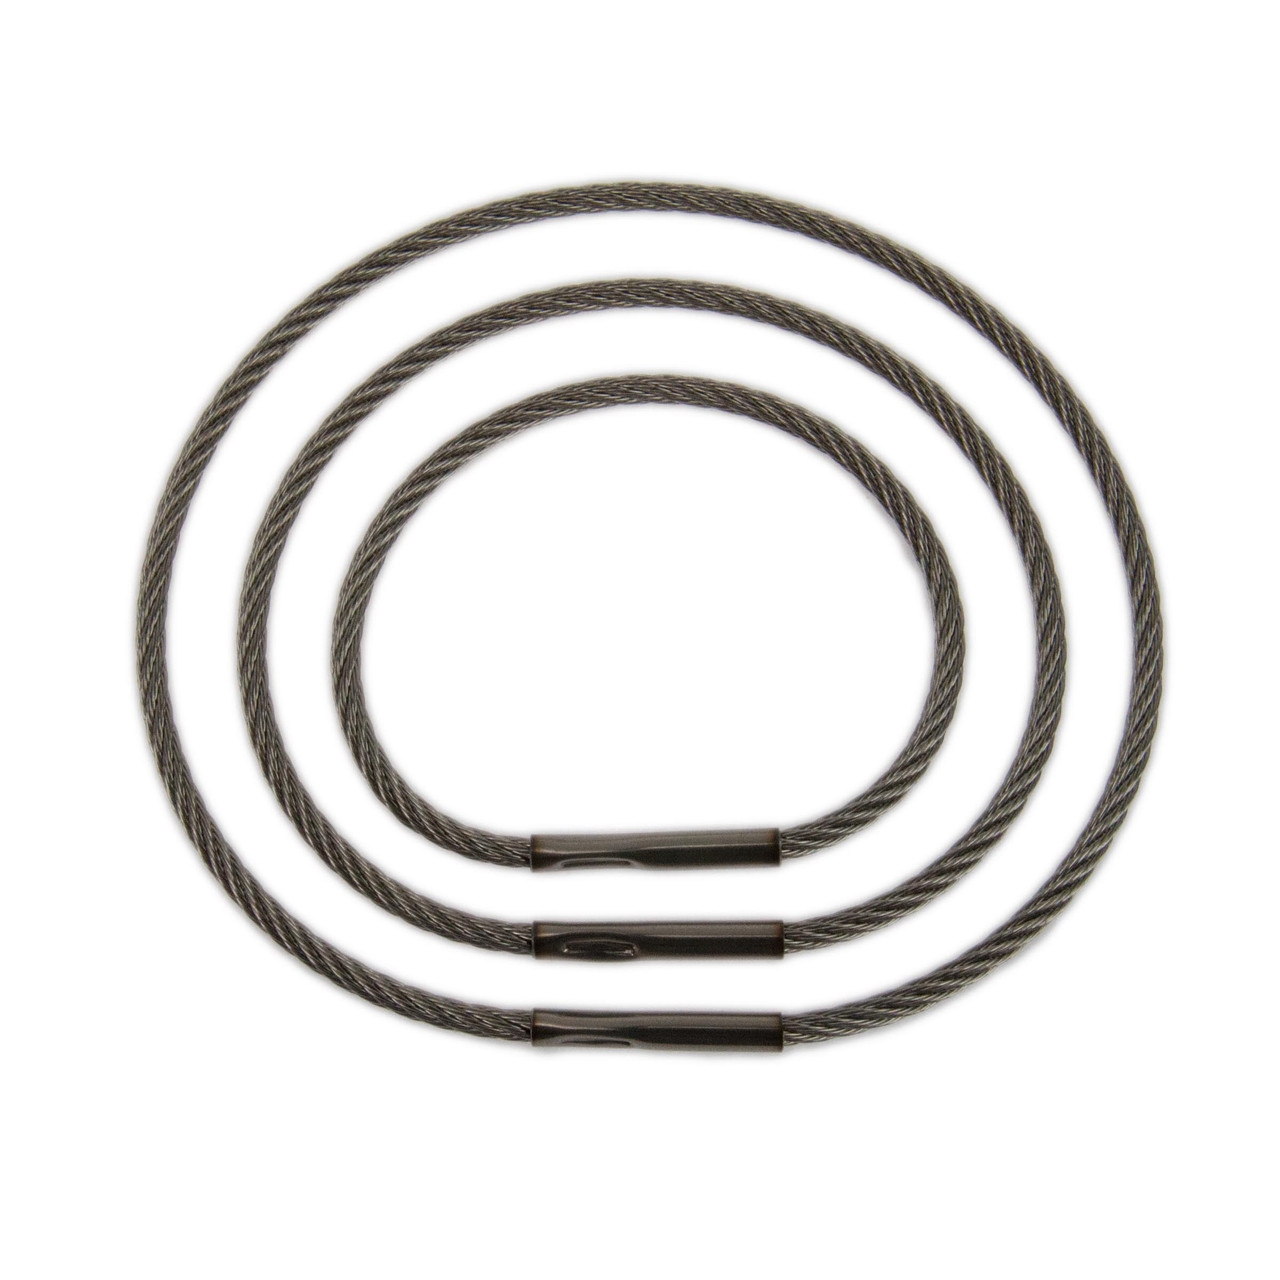 6 Cable Key Rings: Stainless Steel Wire Keyrings, Metal Ring